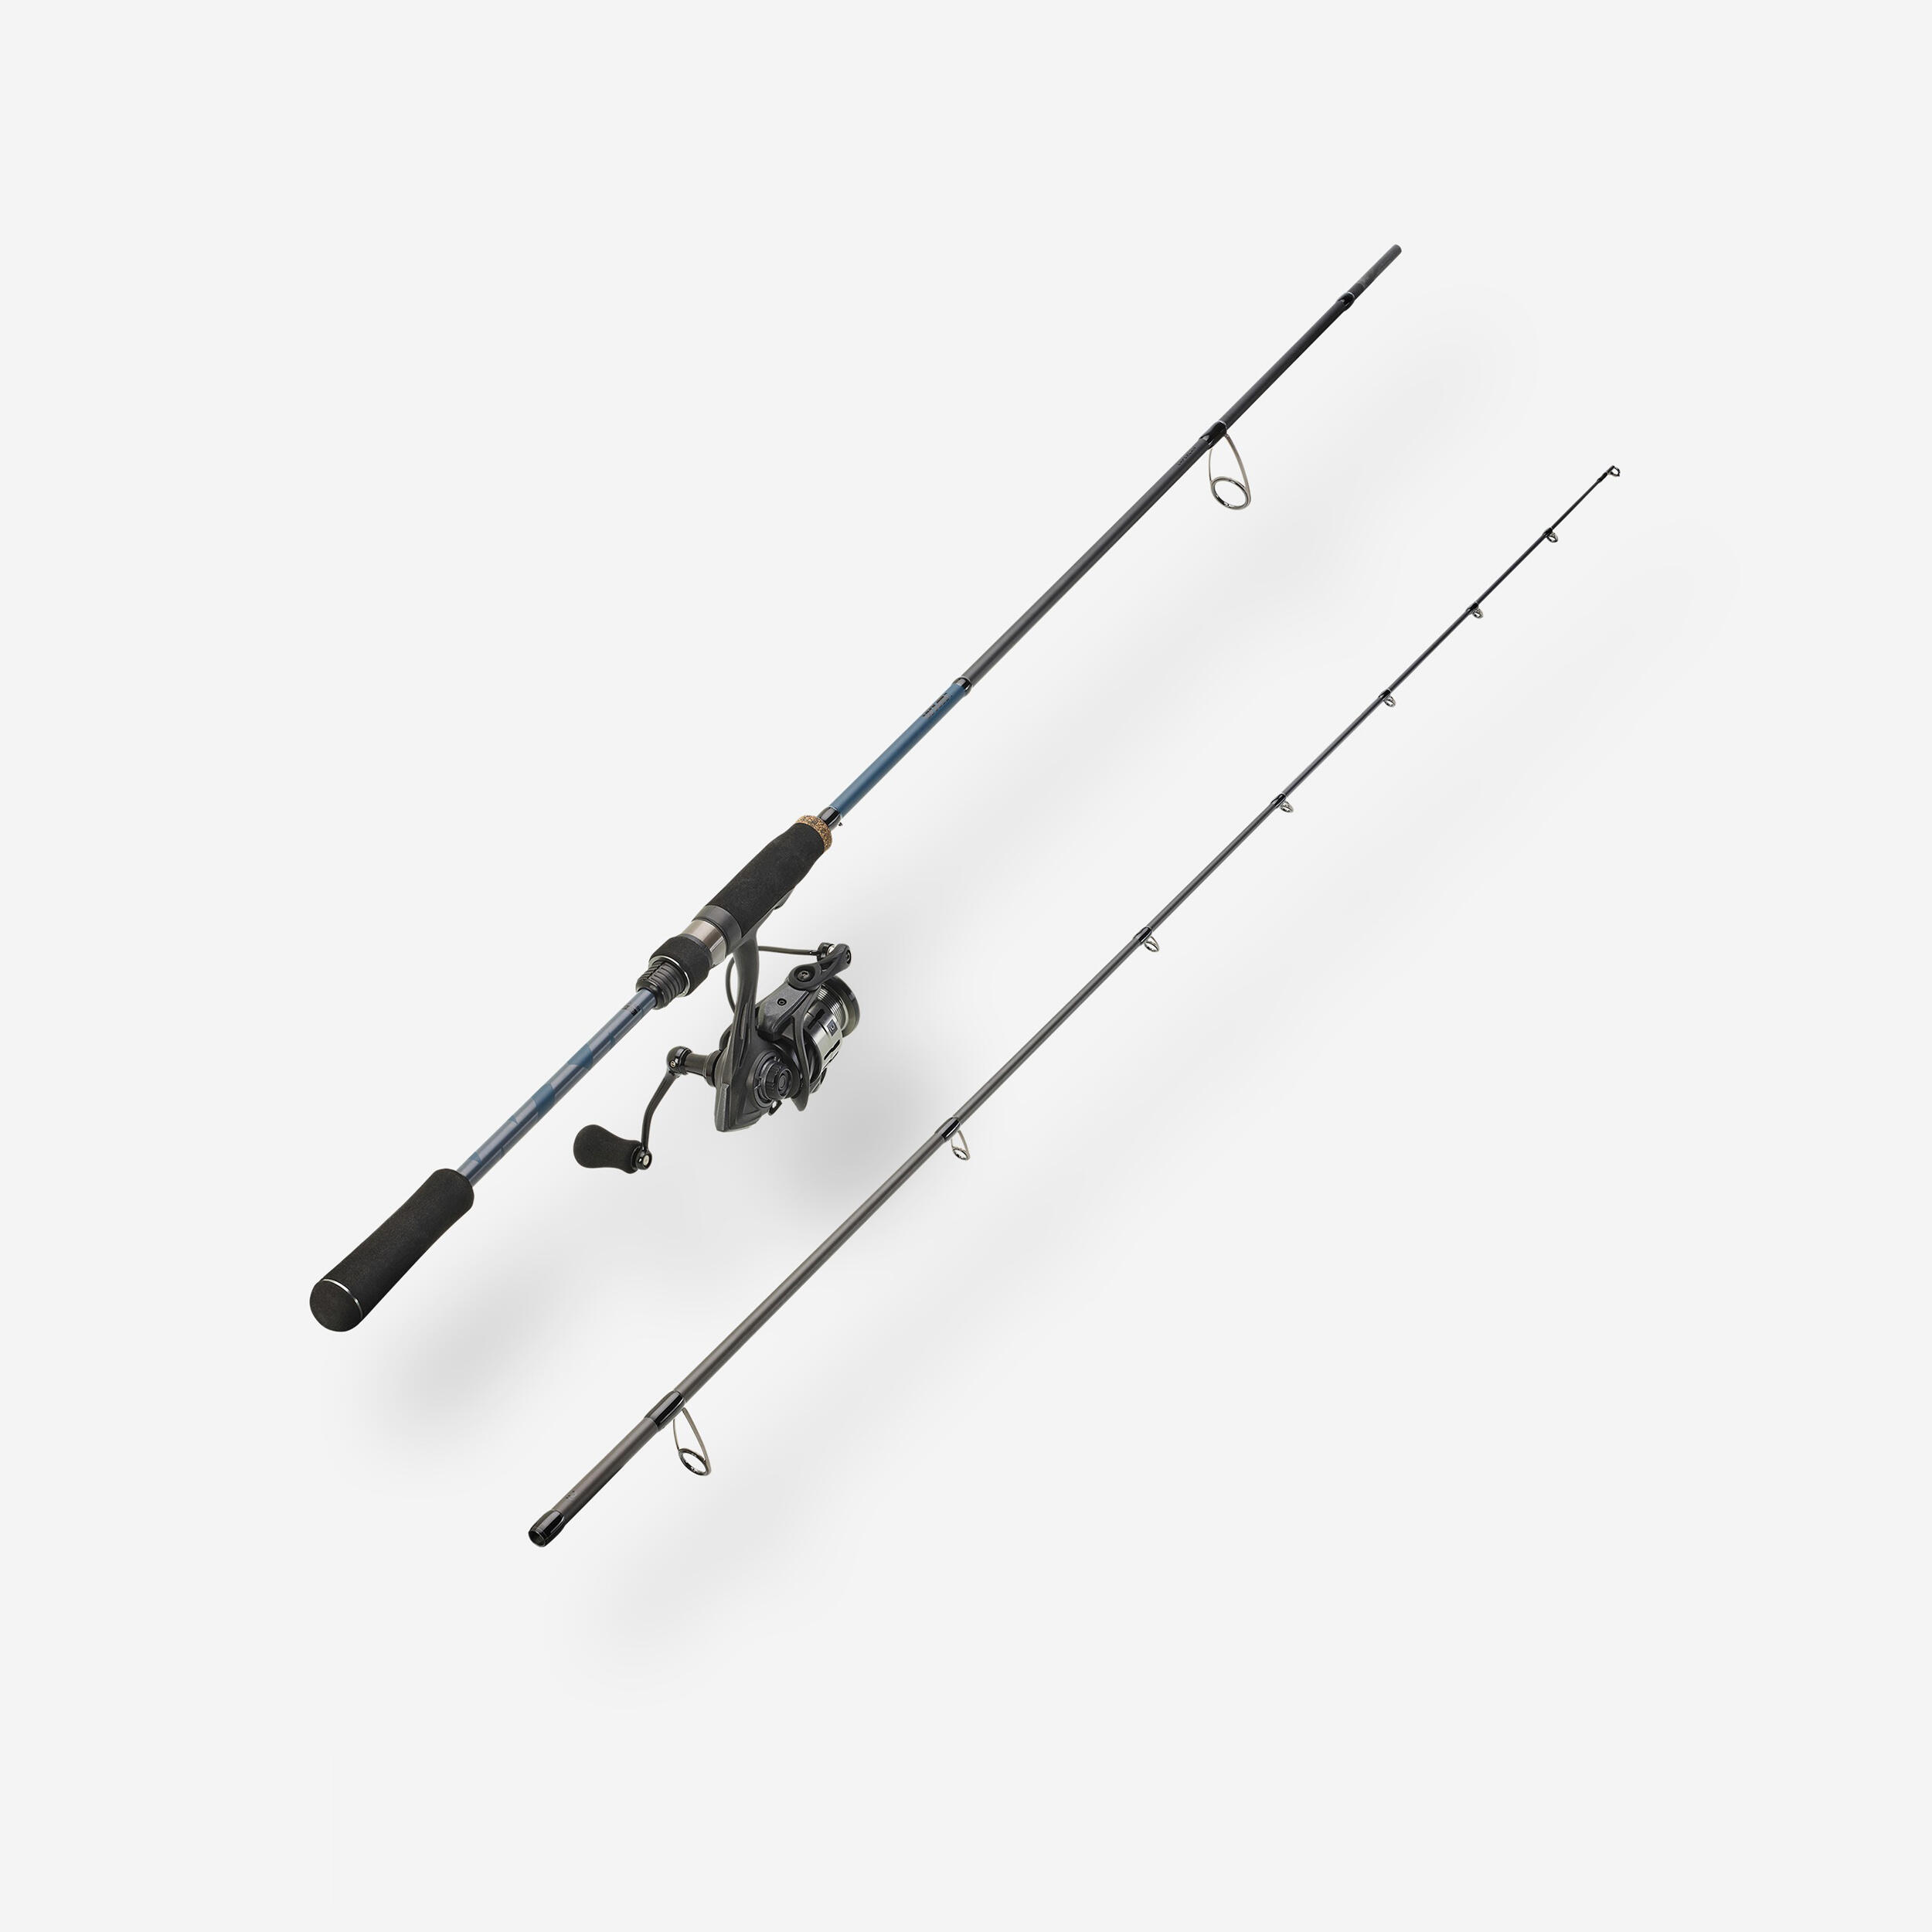 WXM-5 210 MH combo lure fishing rod and reel - black, Dark blue - Caperlan  - Decathlon